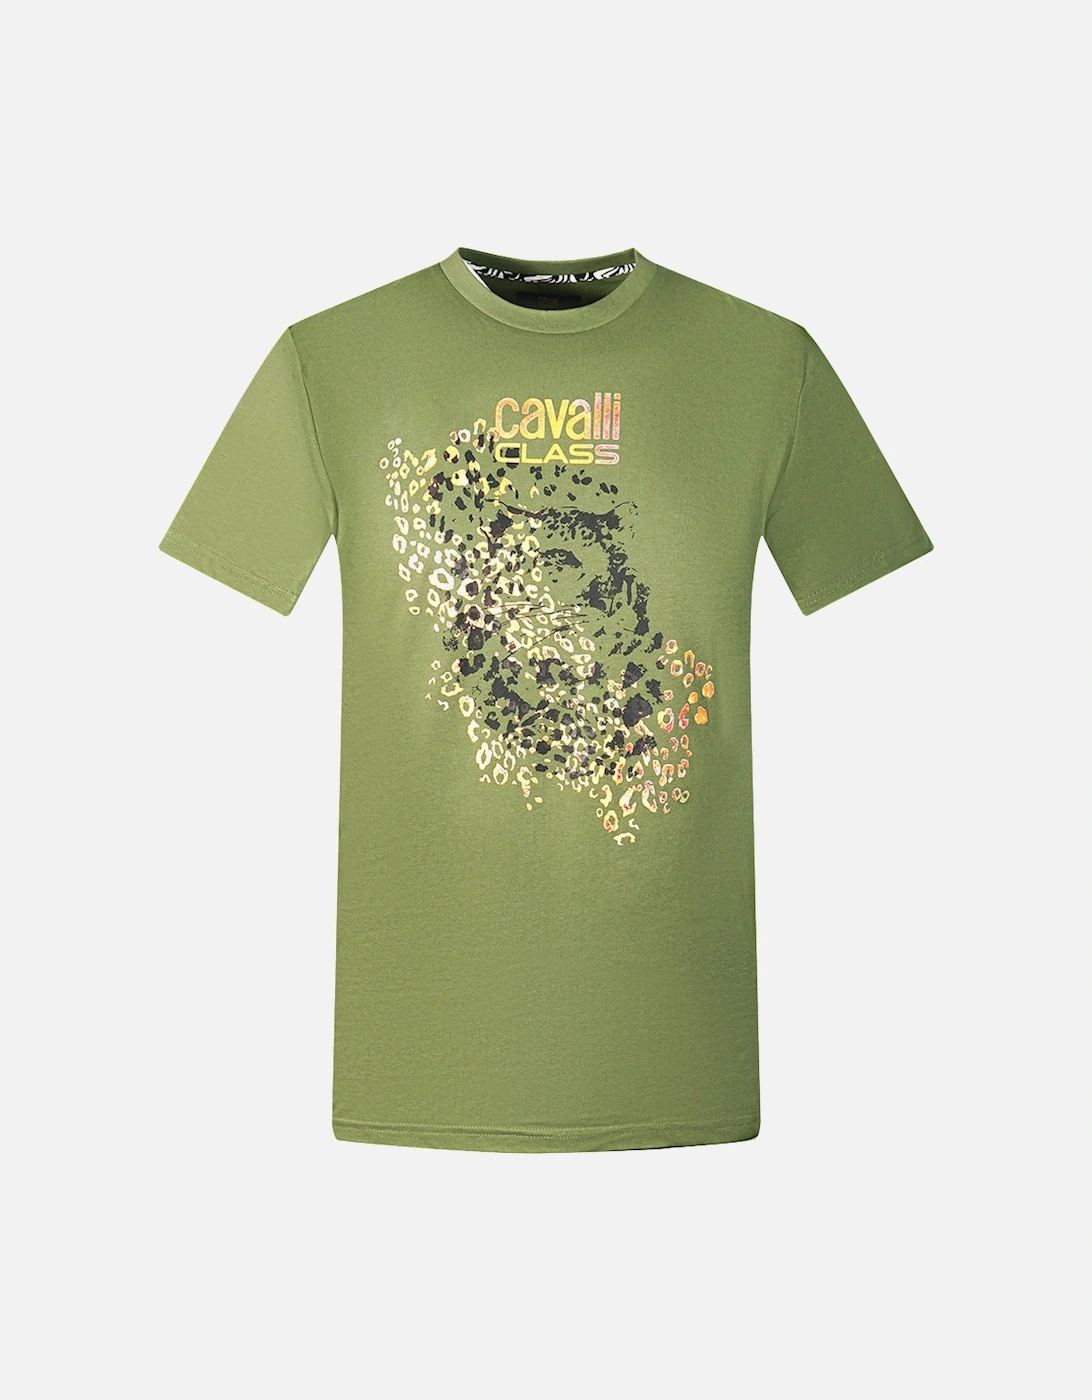 Cavalli Class Leopard Print Silhouette Green T-Shirt, 3 of 2